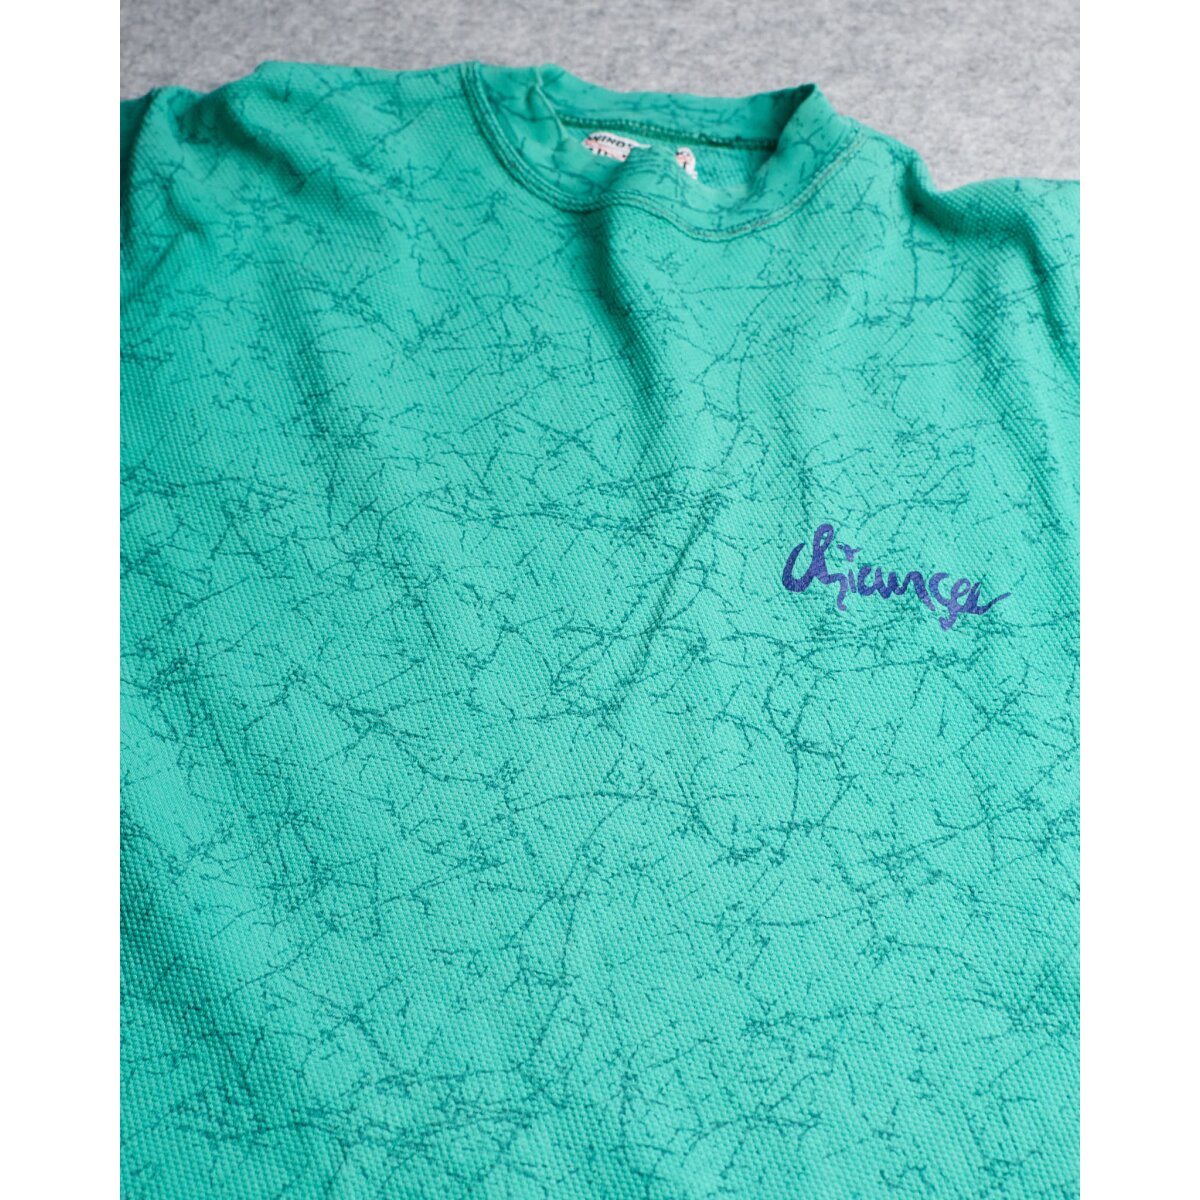 Chiemsee Vintage T-Shirt (M/L), 39,00 €